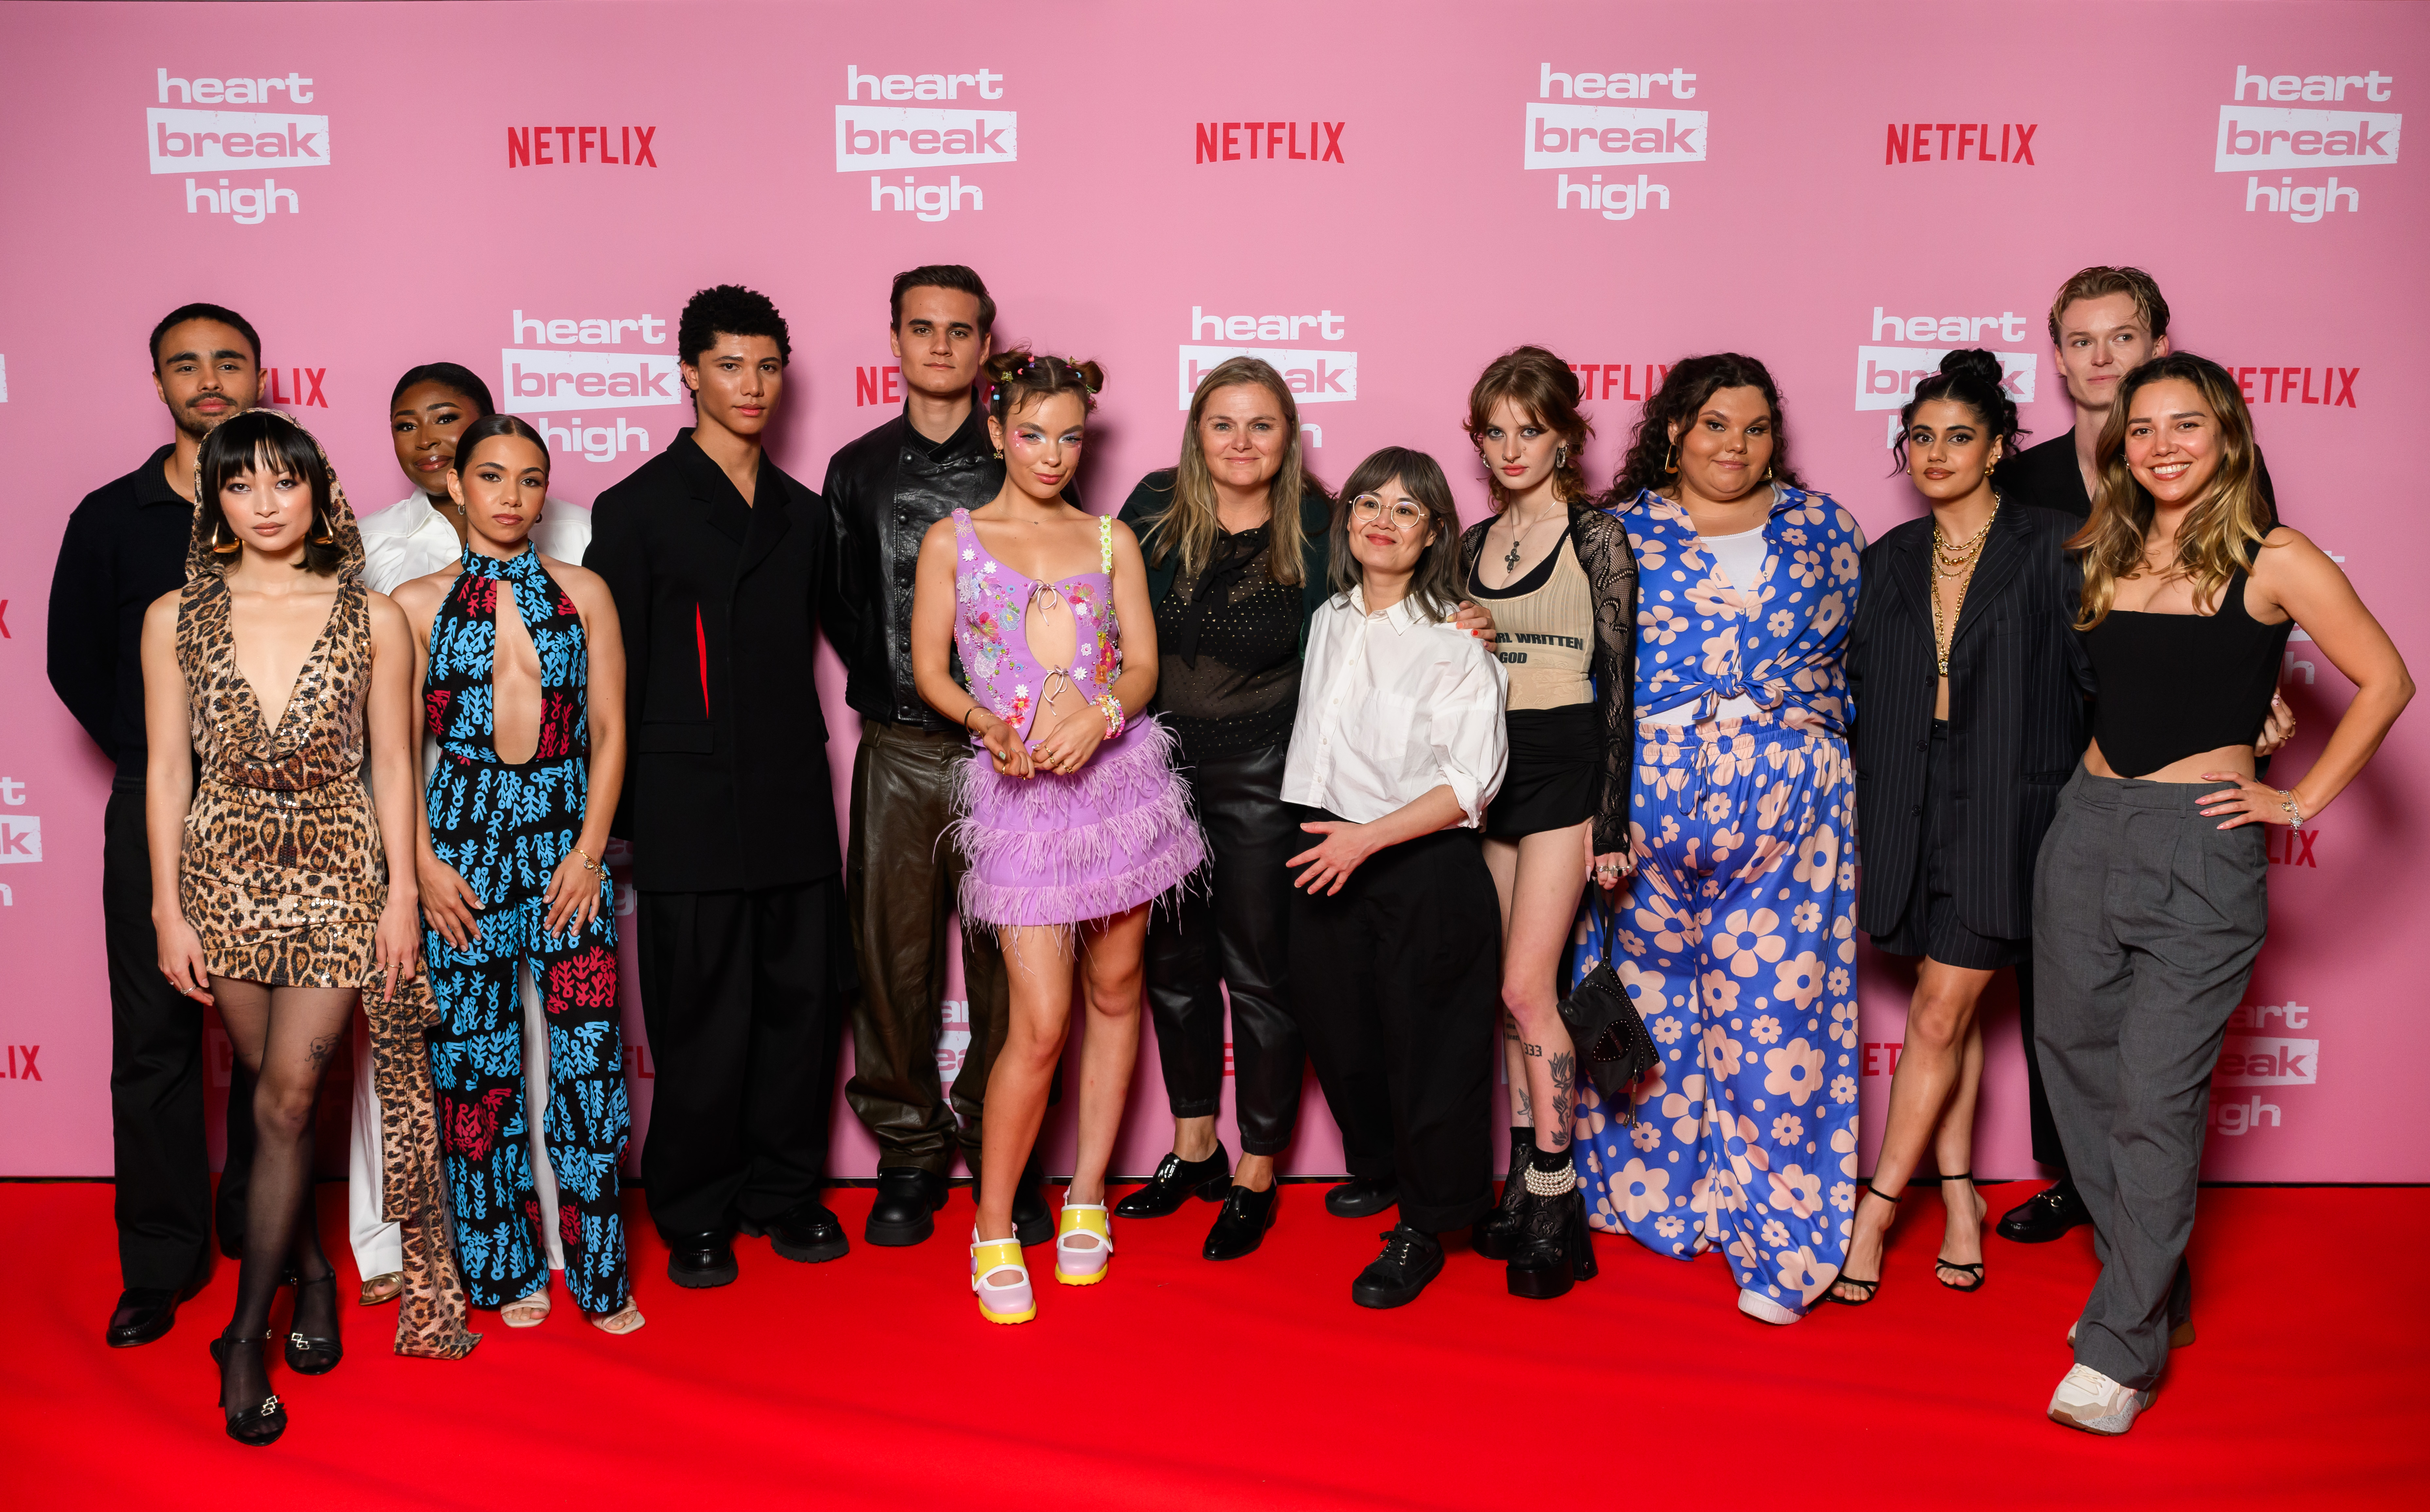 Netflix announces 'Heartbreak High' will wrap up with third series